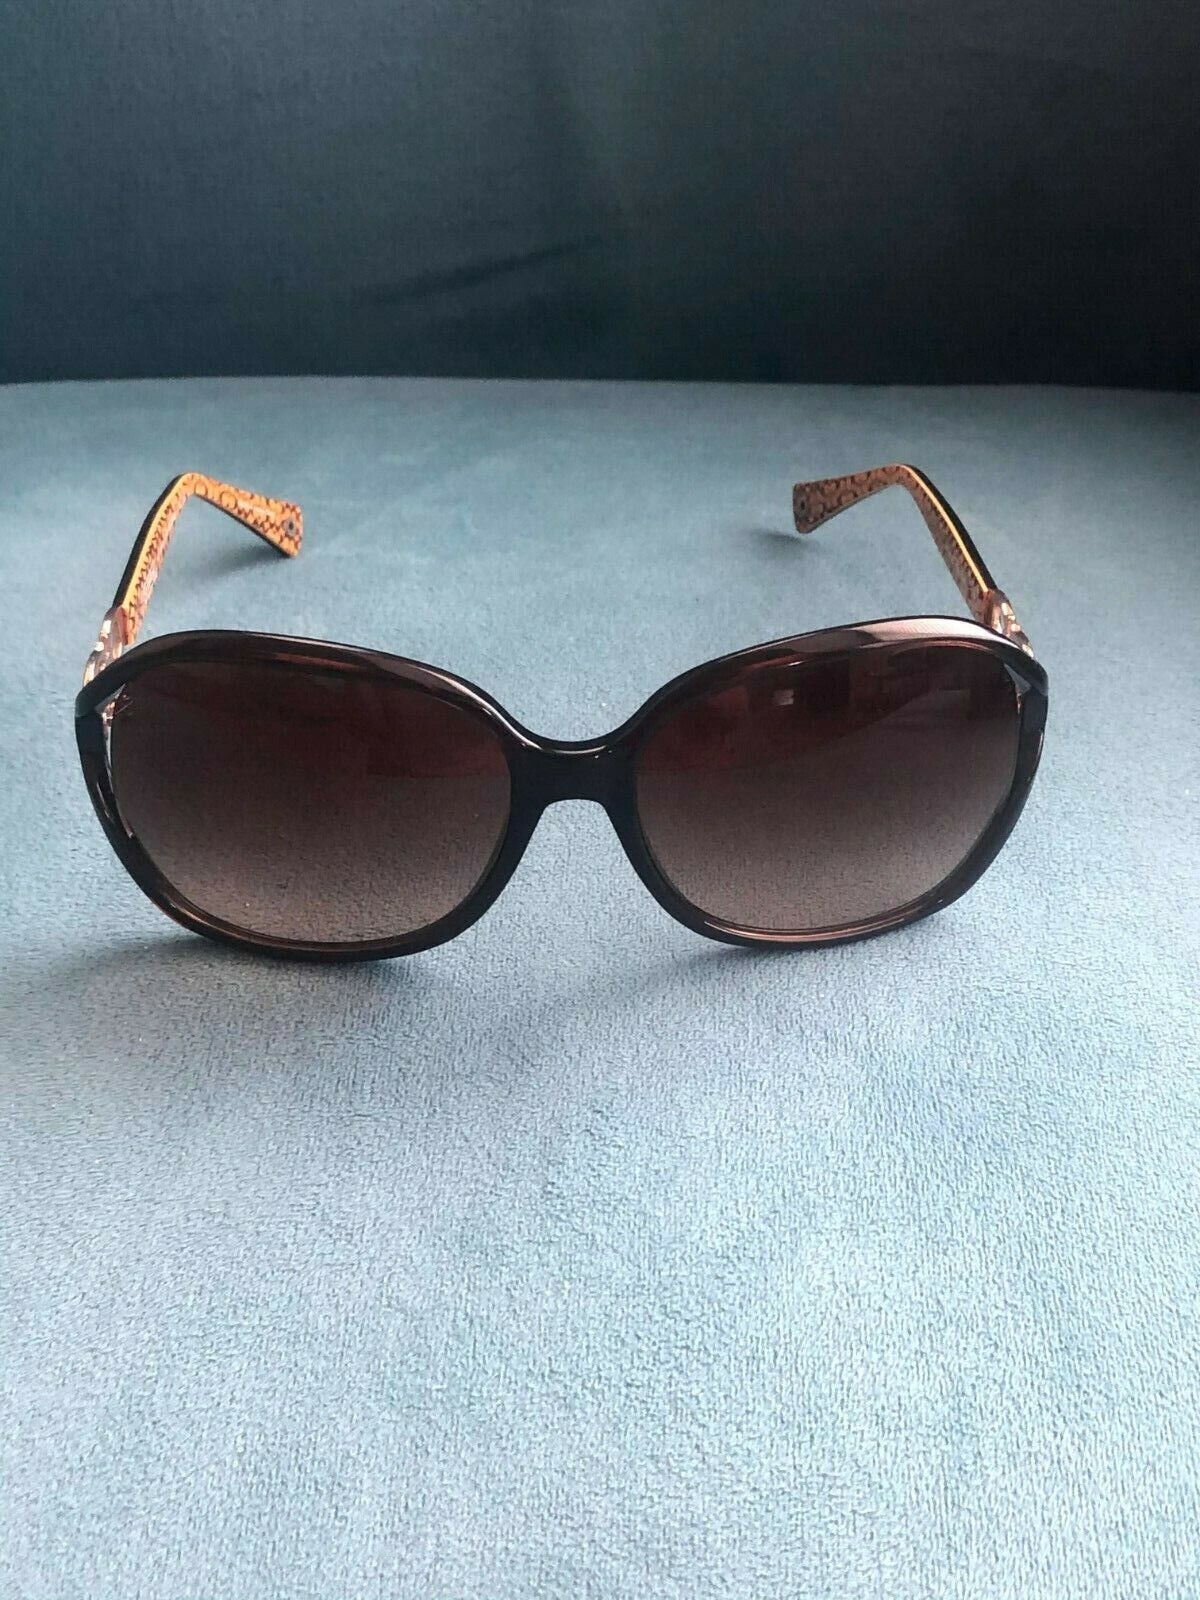 Stunning COACH Sunglasses, gently used, chic ligh… - image 1